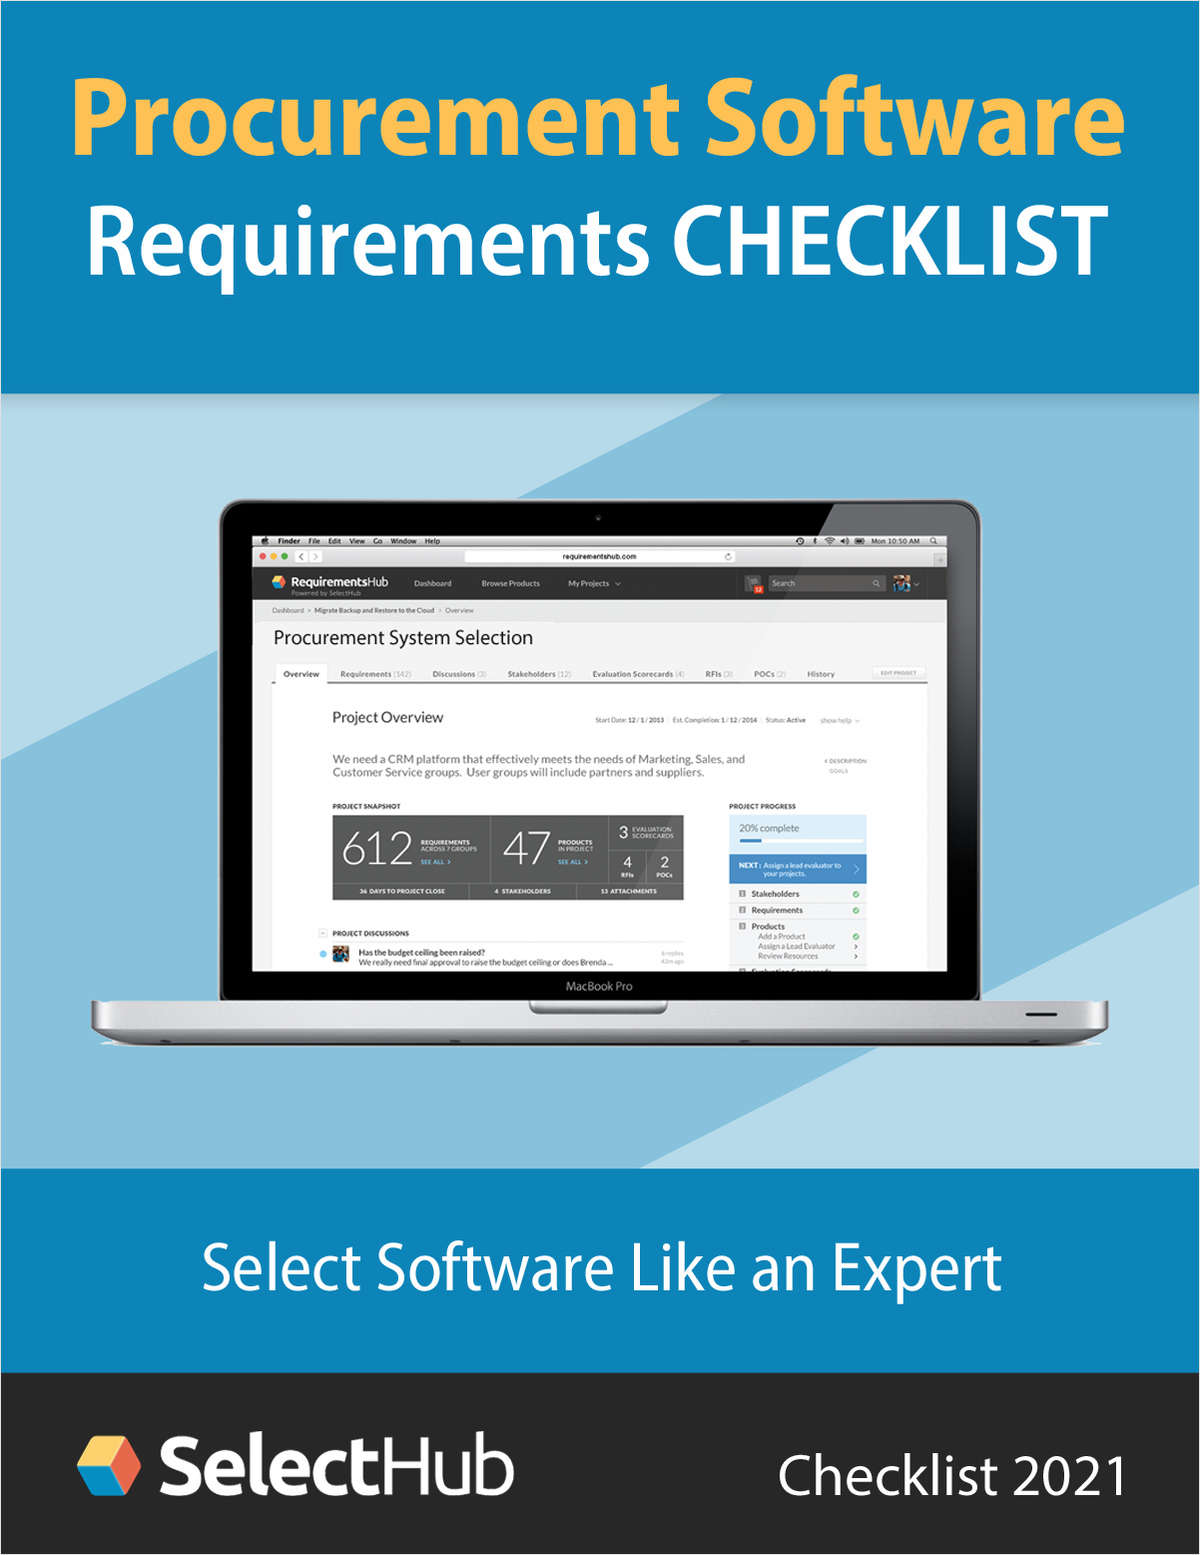 Procurement Software Requirements Checklist 2021